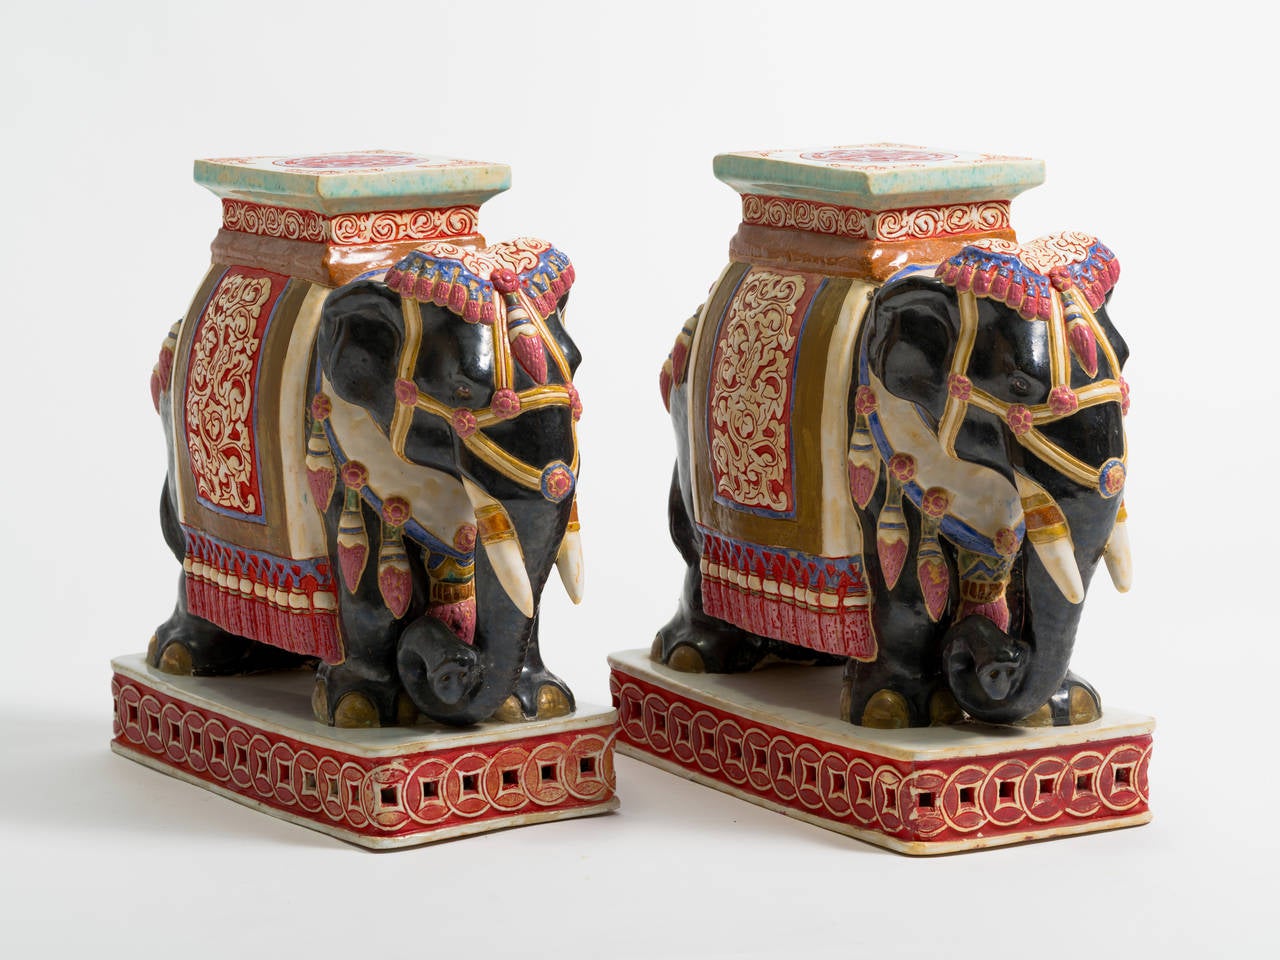 Pair of ceramic elephant garden seats, hand painted.